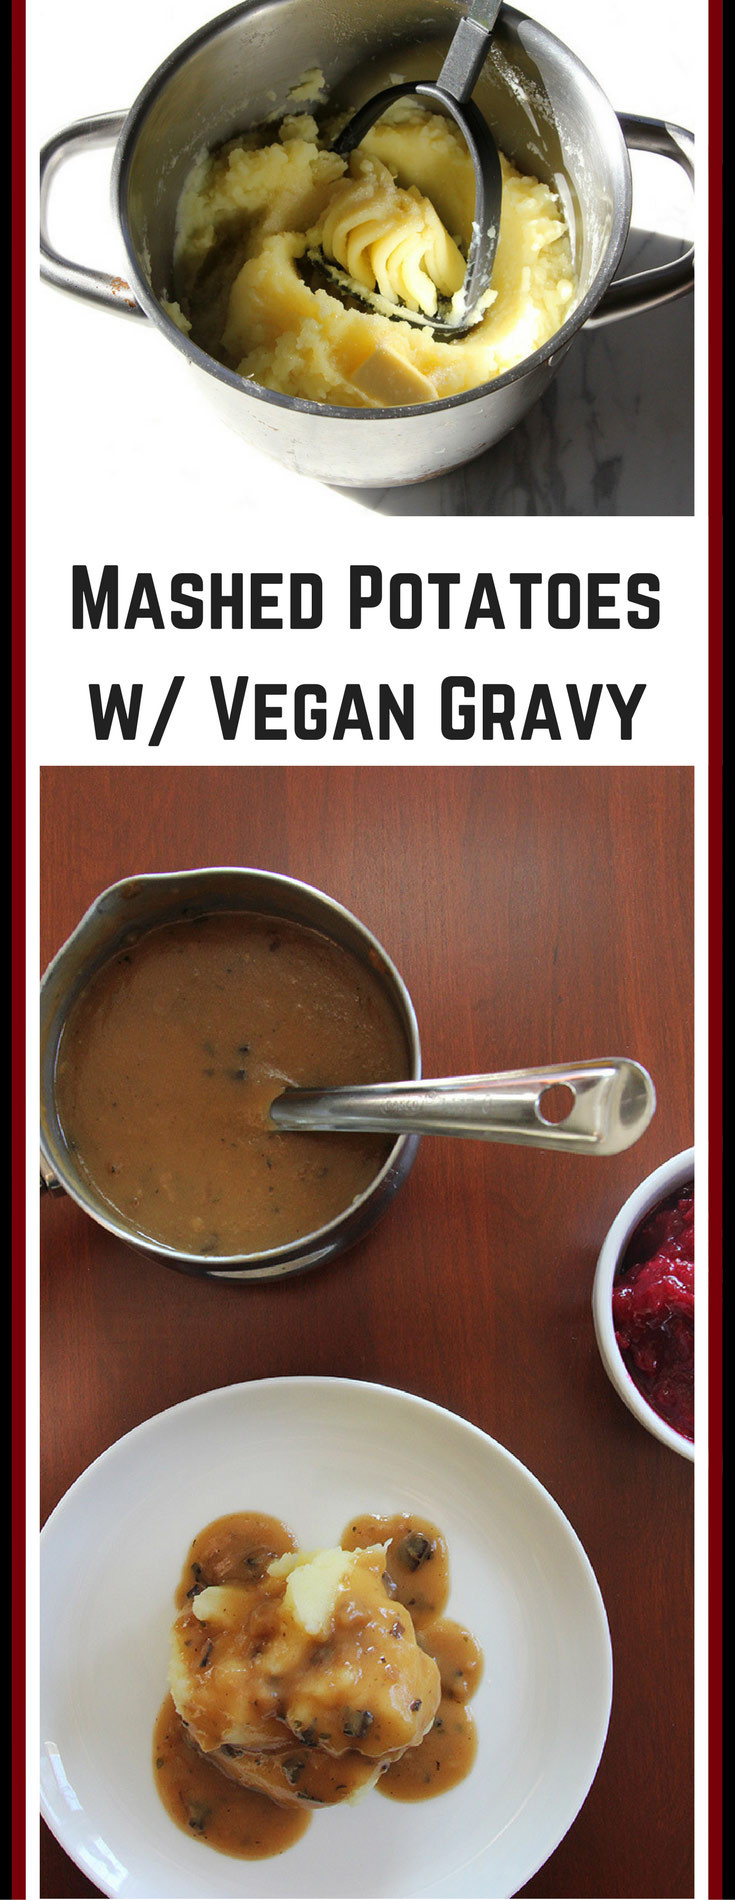 Vegetarian Gravy Recipe For Mashed Potatoes
 mashed potato with vegan gravy – Buttered Veg